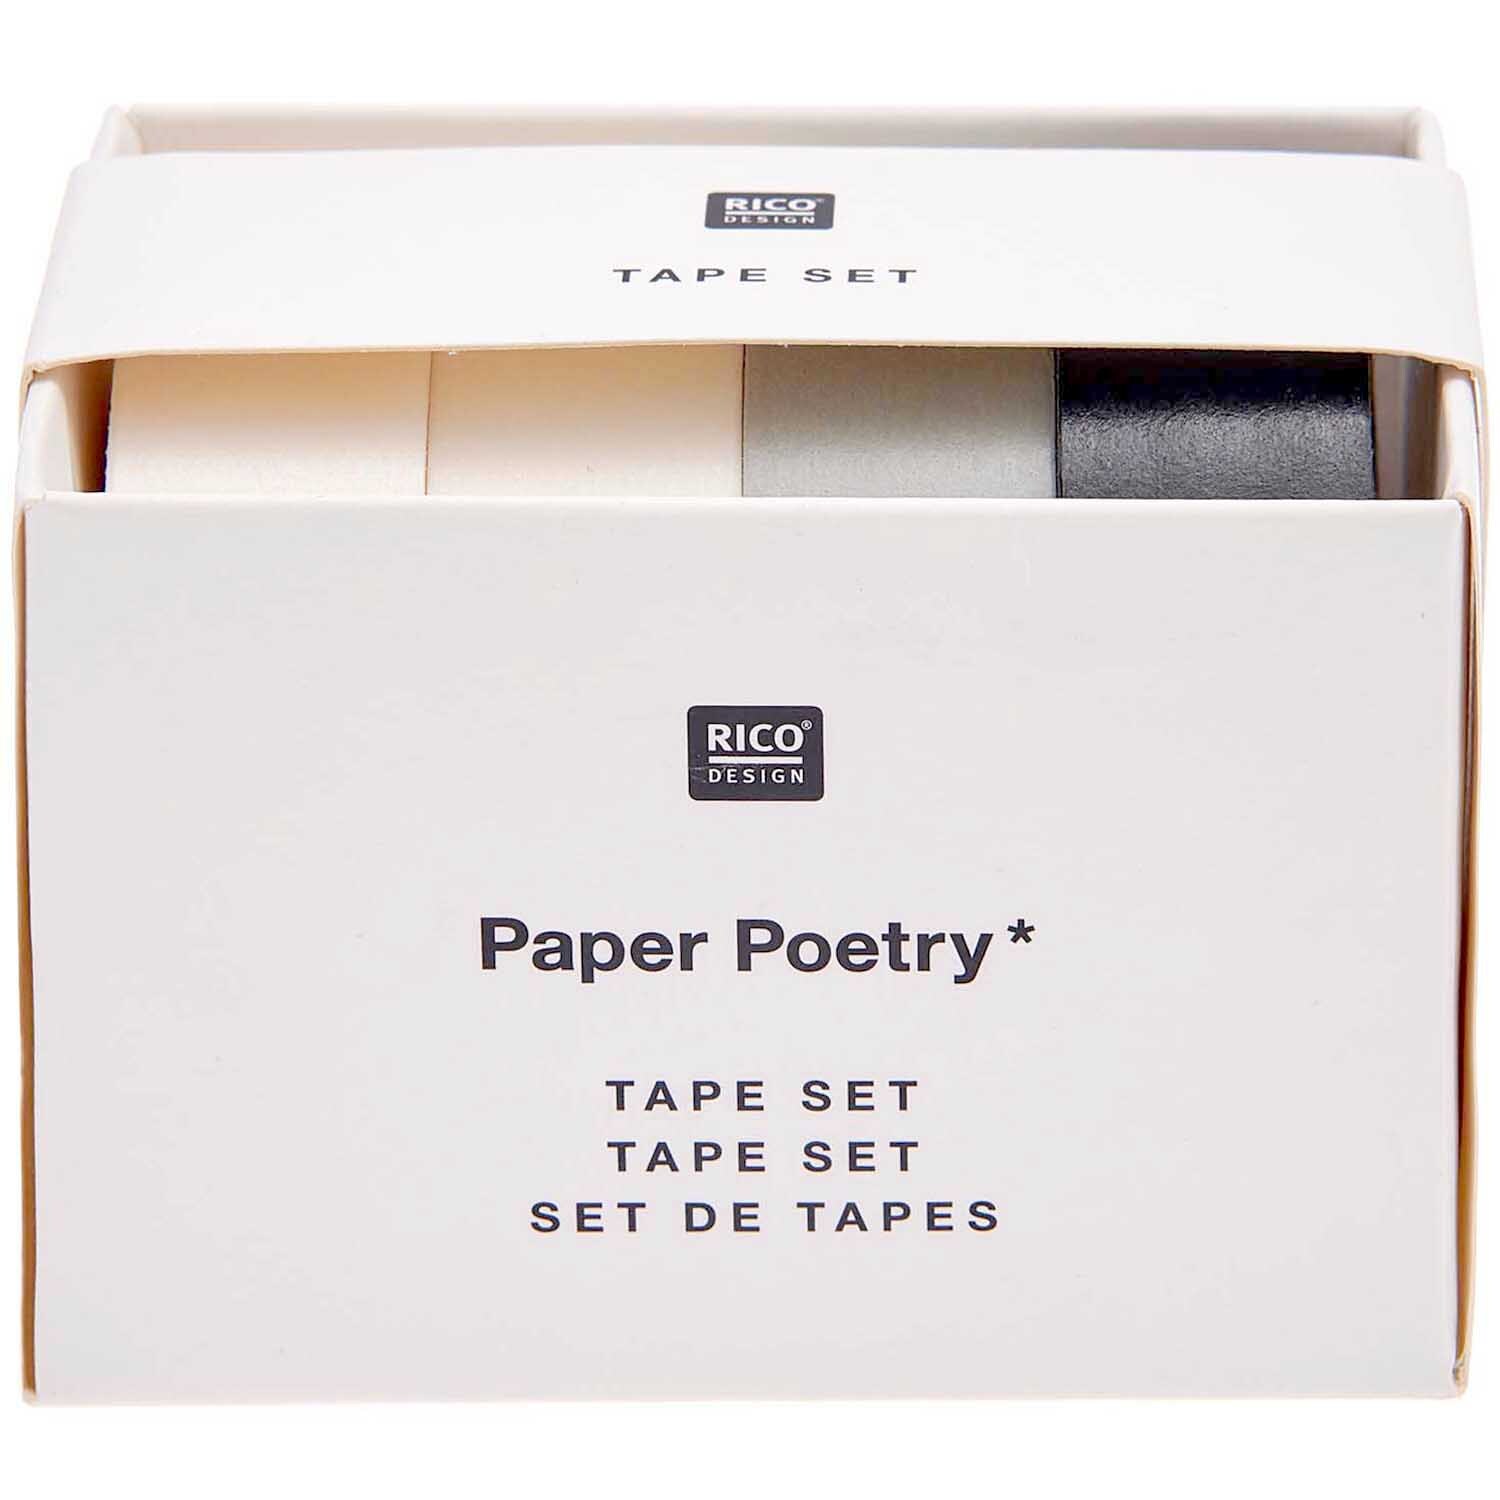 Paper Poetry Tape Set schwarz-weiß 15mm 10m 4teilig